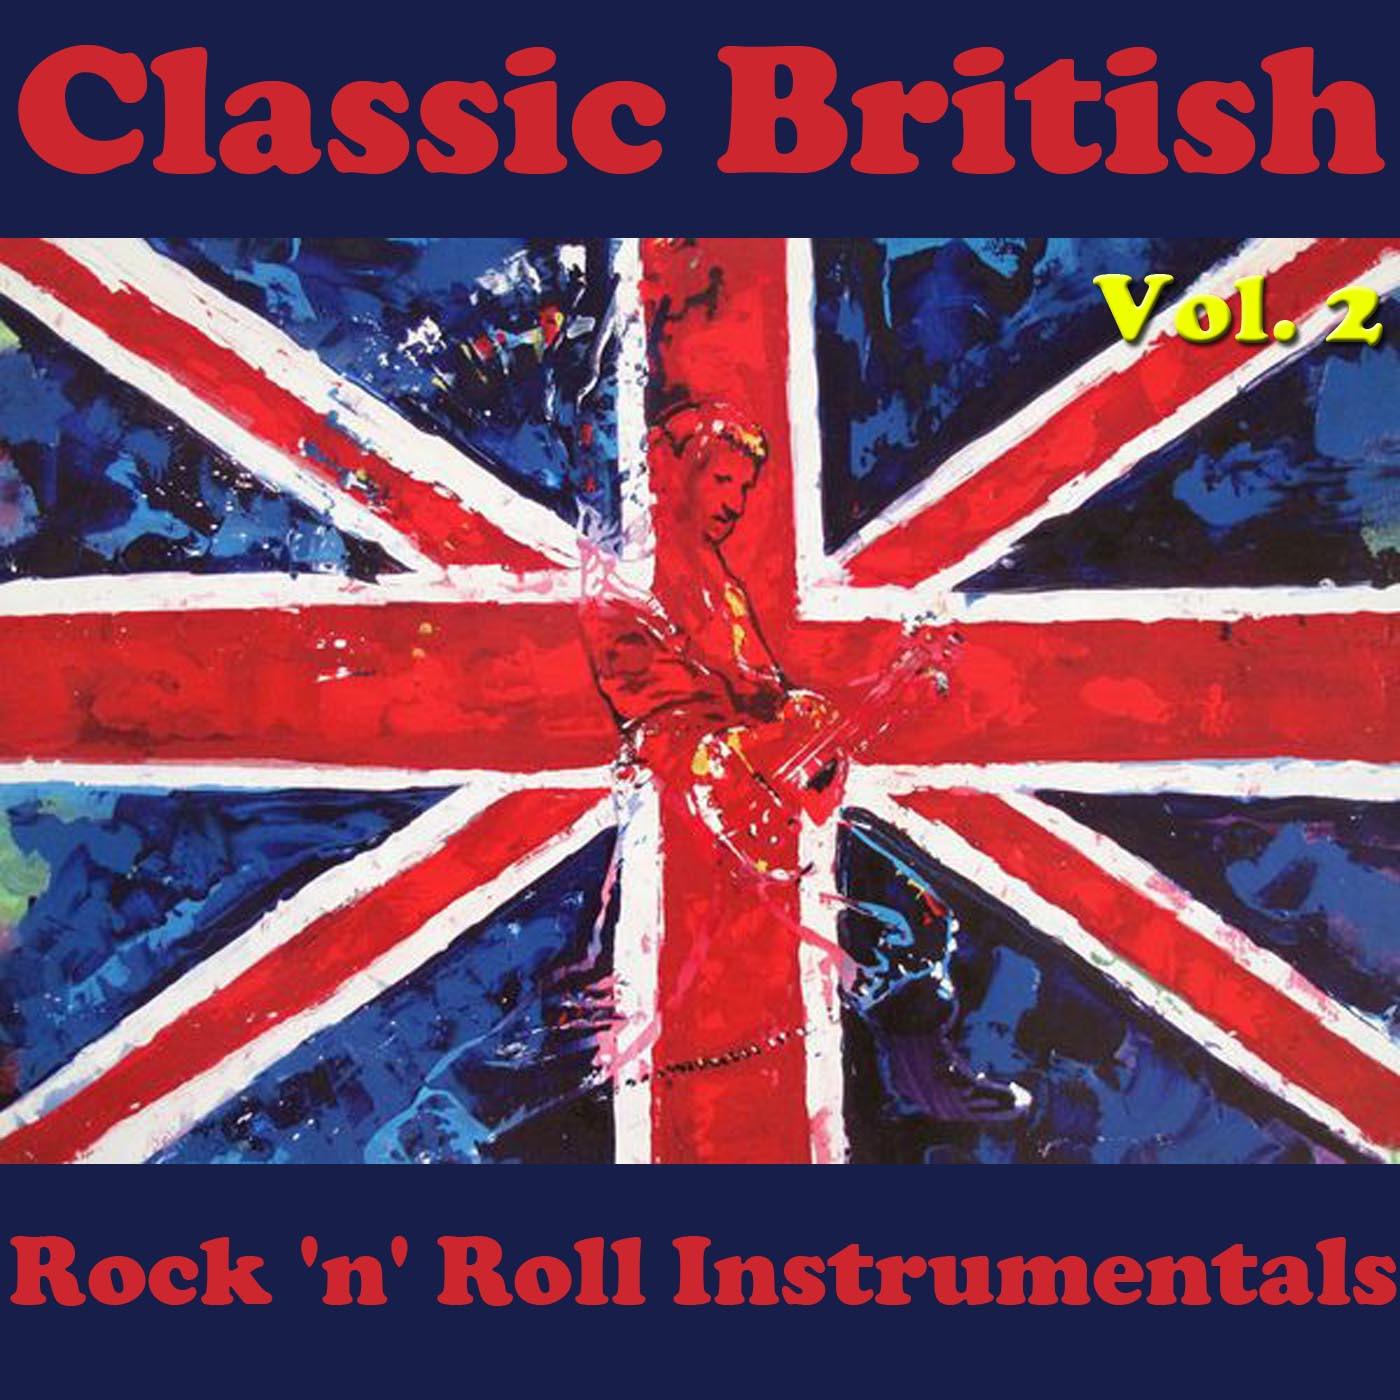 Classic British Rock 'n' Roll Instrumentals, Vol. 2